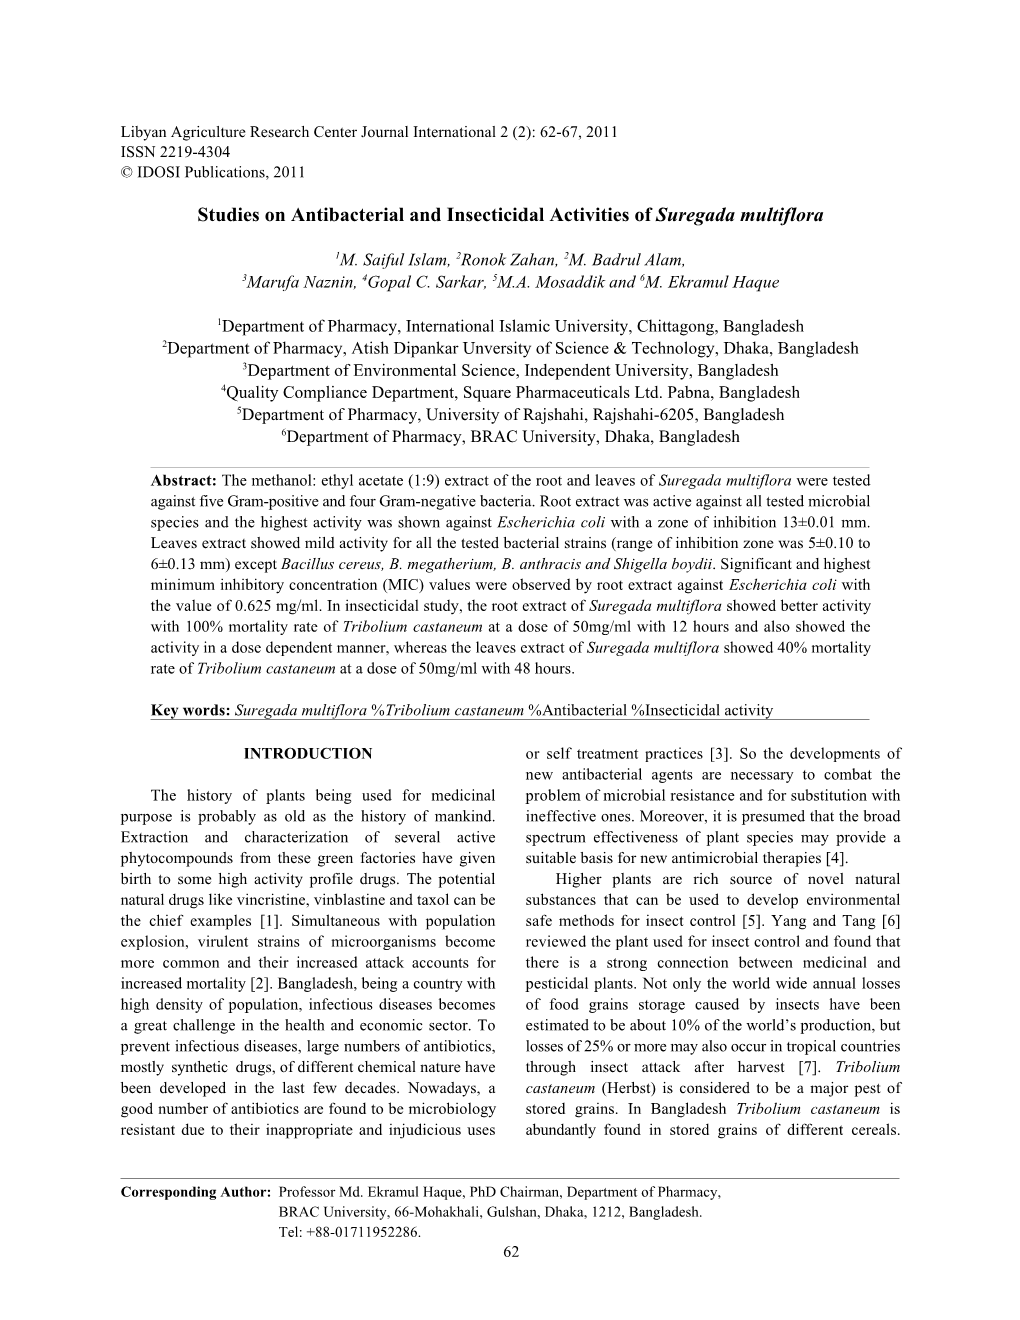 Studies on Antibacterial and Insecticidal Activities of Suregada Multiflora